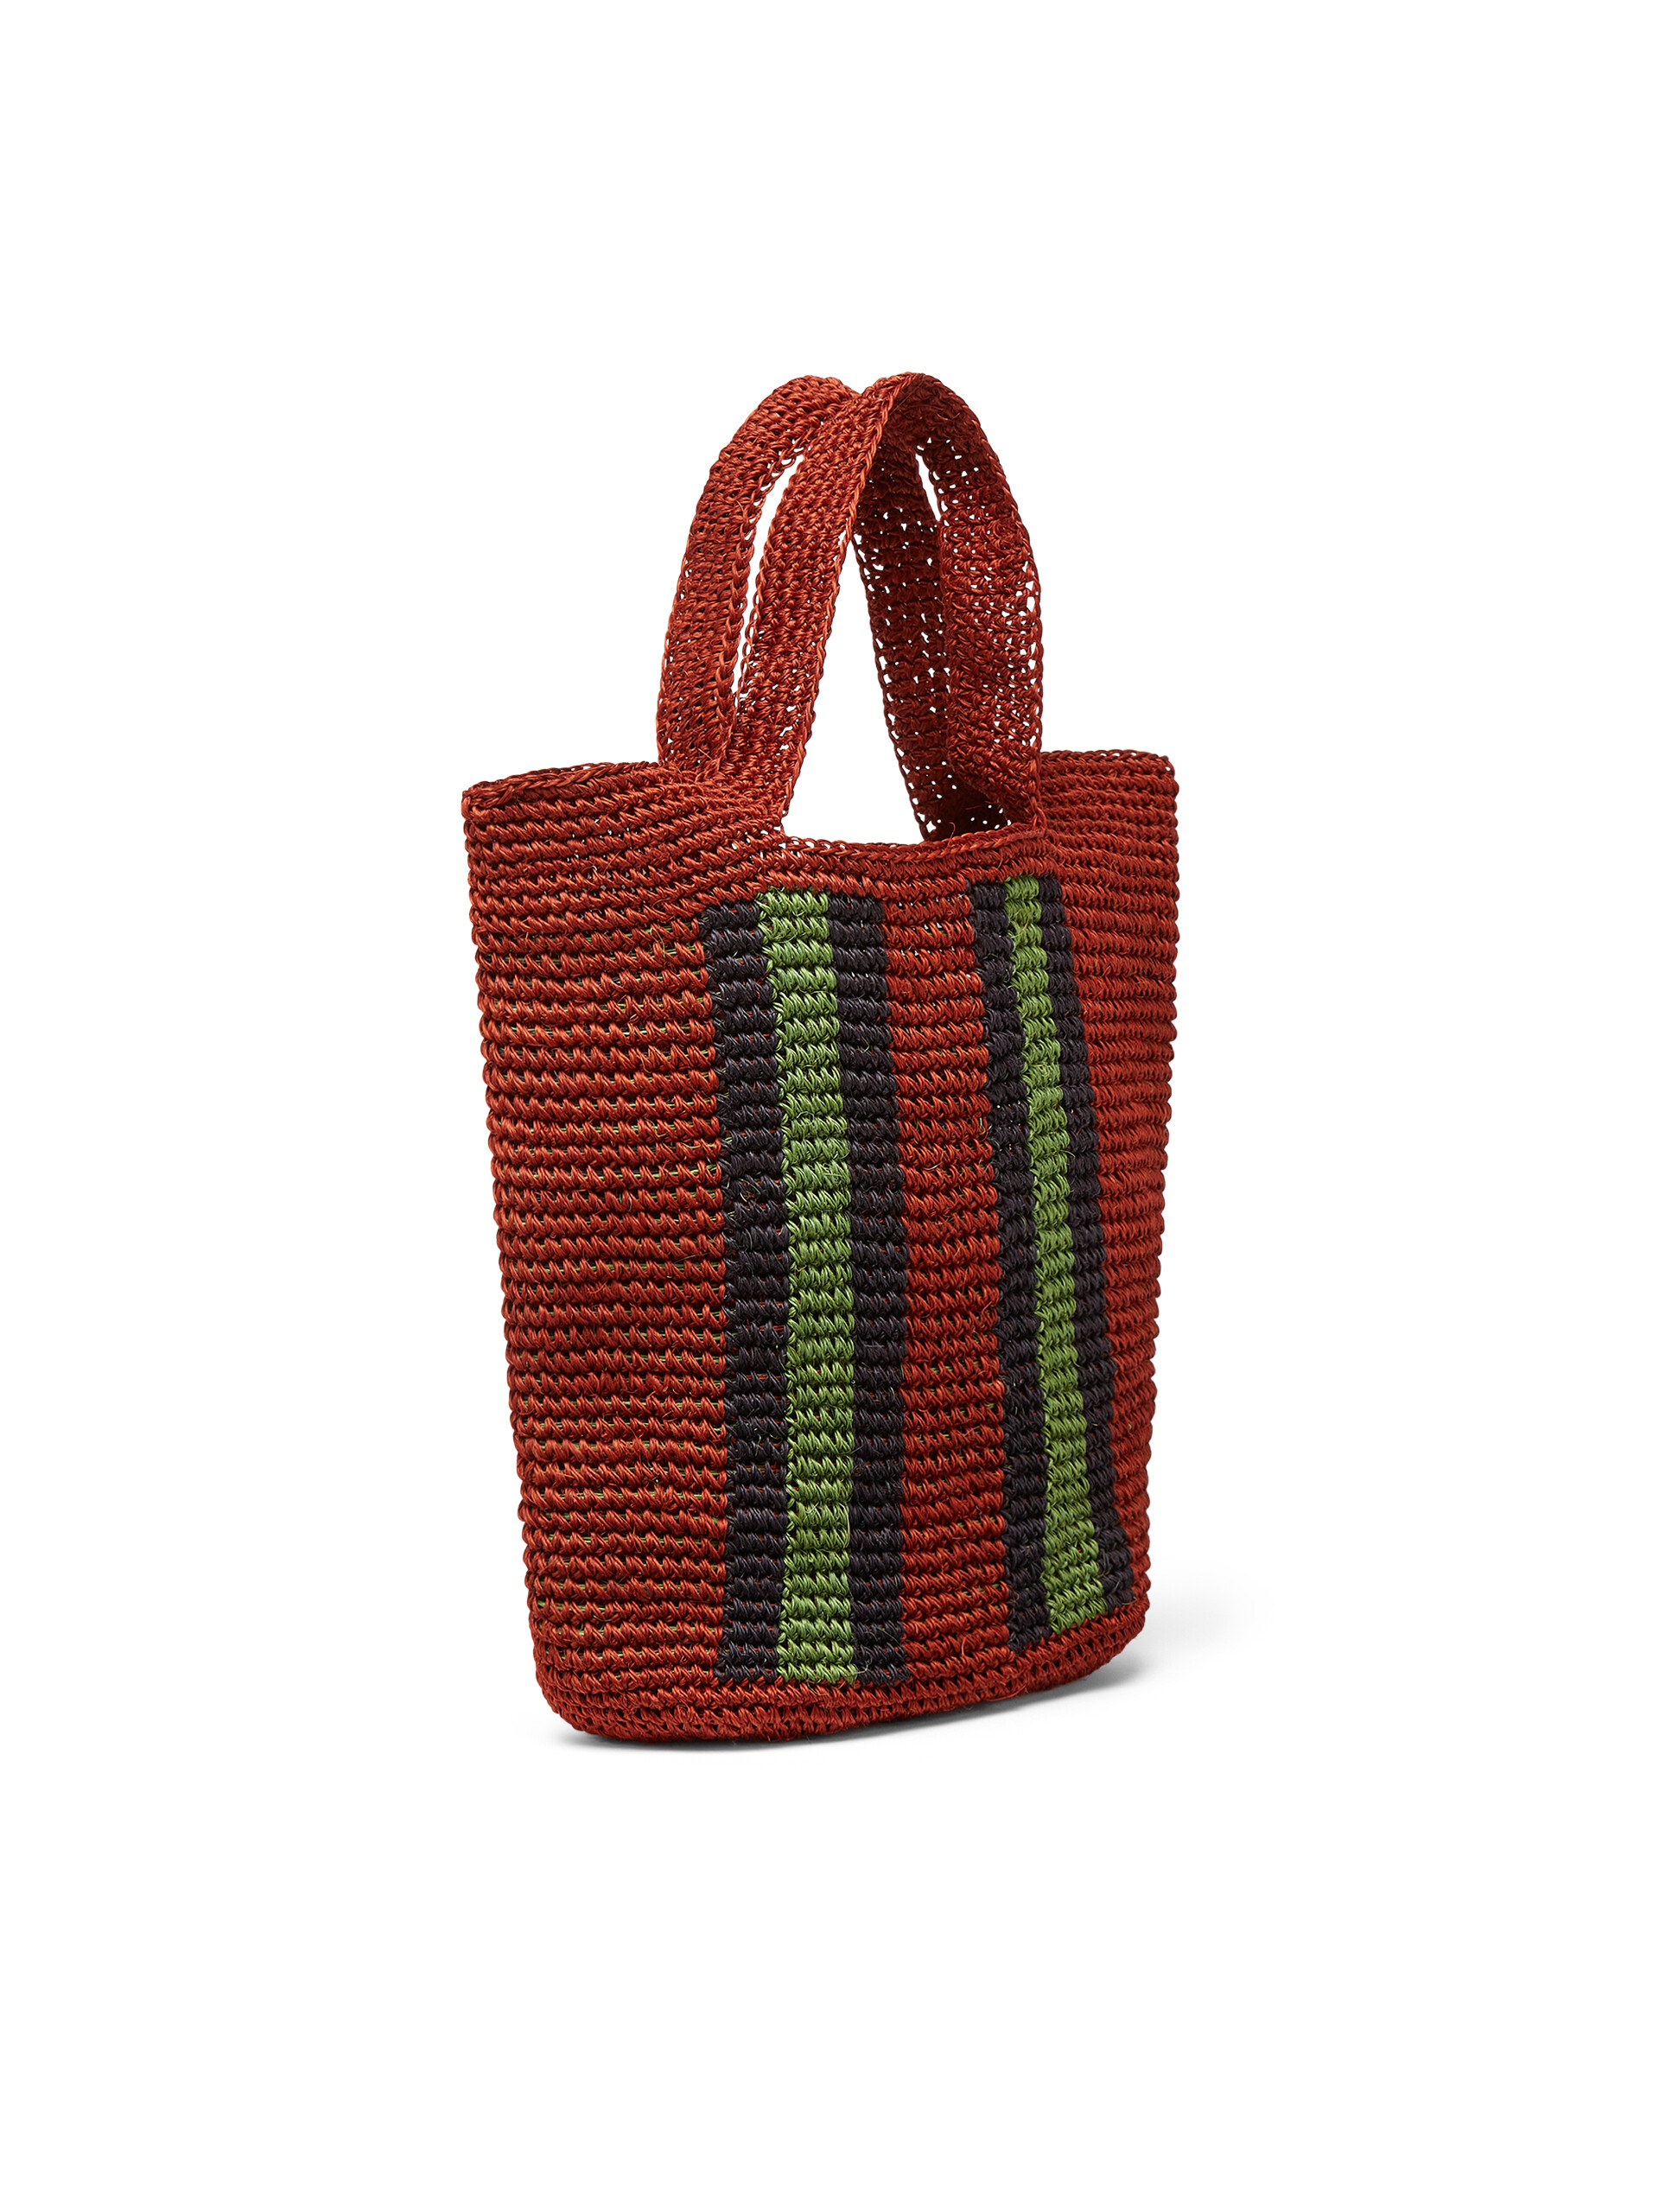 MARNI MARKET FIQUE bag in multicolor burnt brown natural fibre - Bags - Image 2